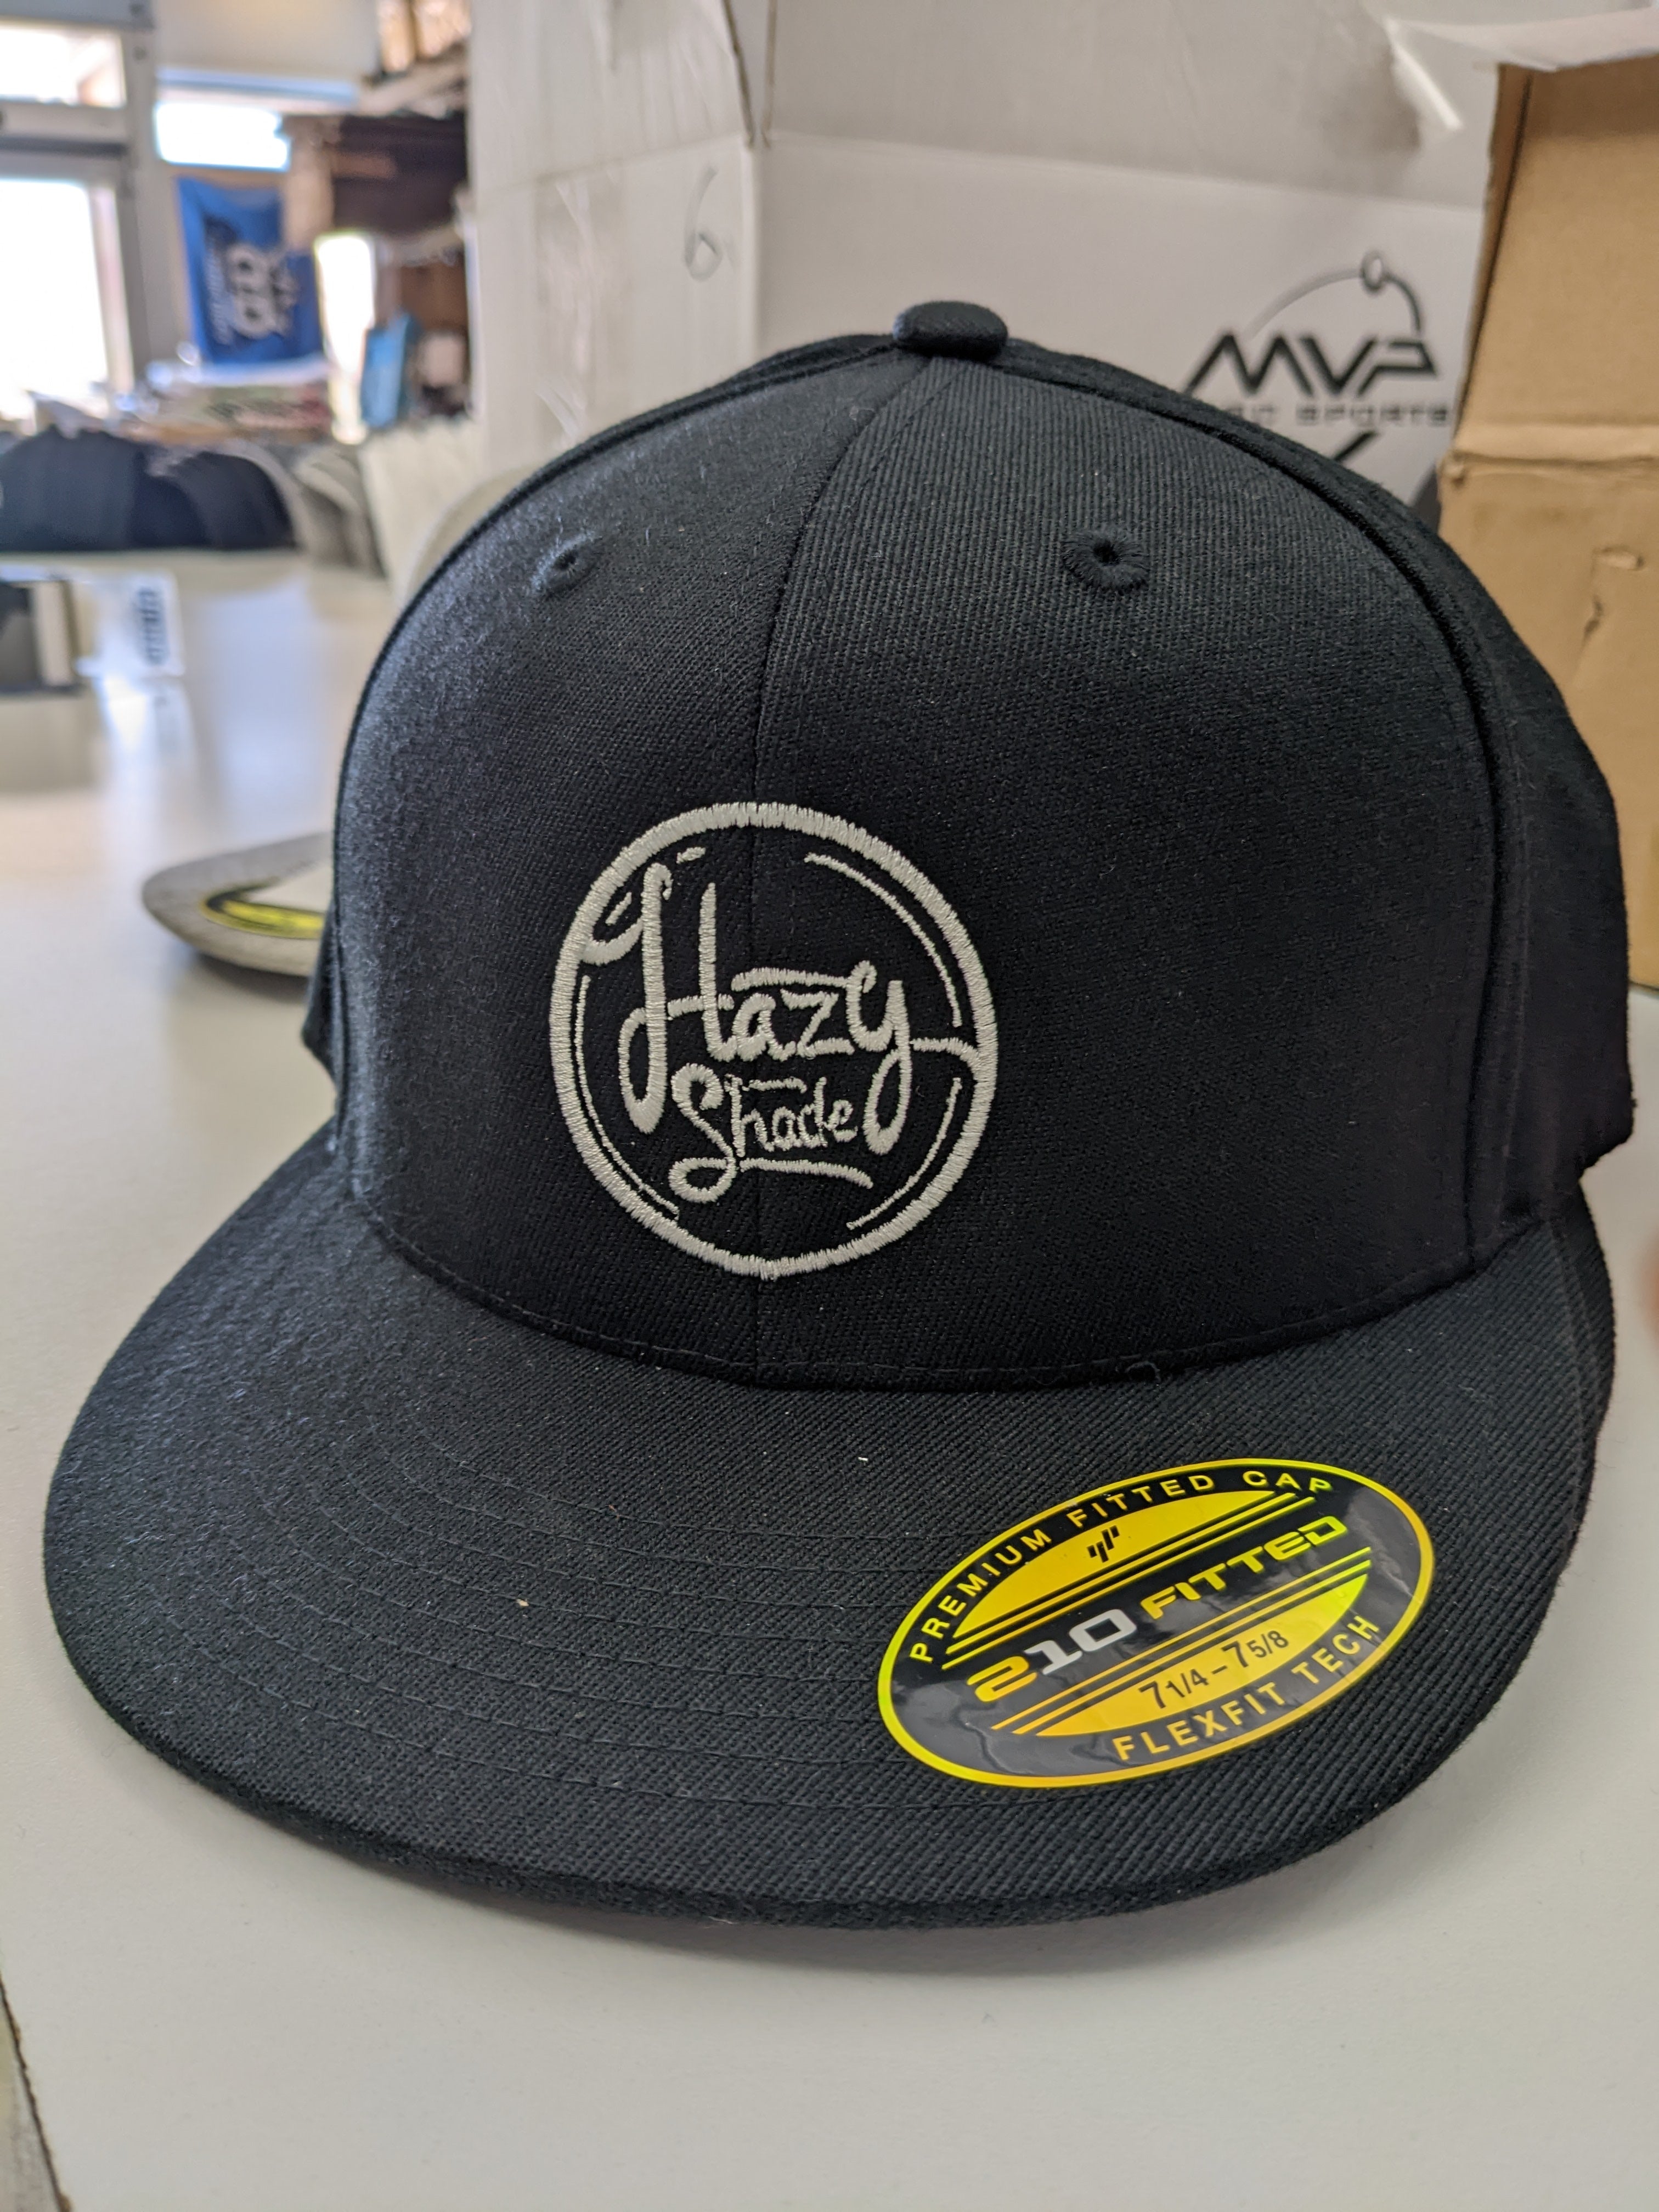 Hazy Shade 210 Fitted Flat Bill Hat Black w/ Circle Logo